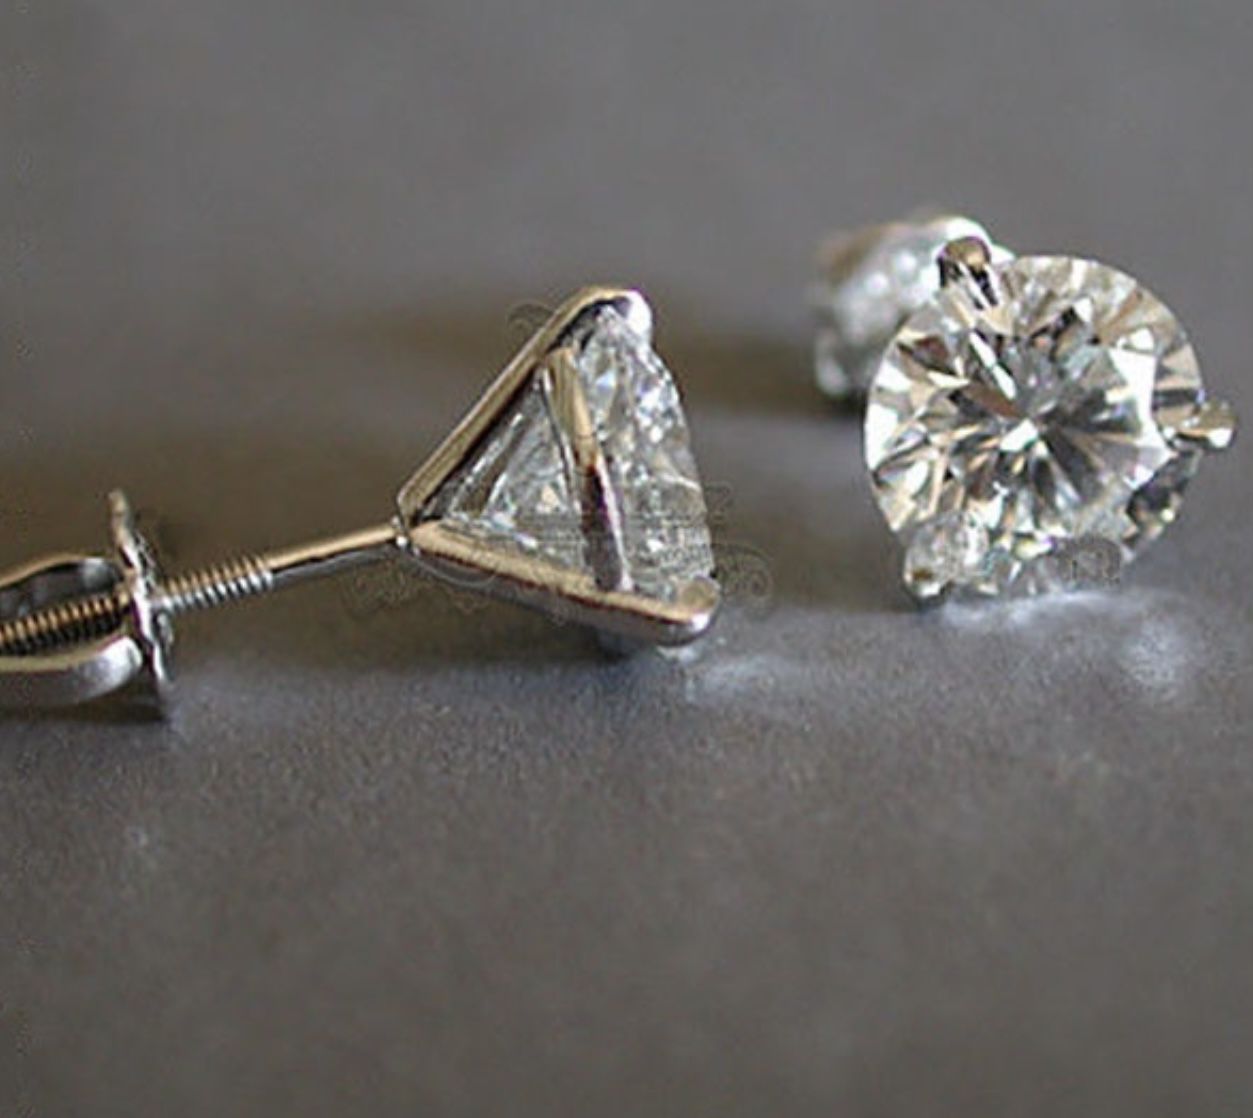 New-1ctw CZ  Diamond Earrings, S925 Sterling Silver, 18k W Gold Earrings,  Threaded Post Prevent Loss